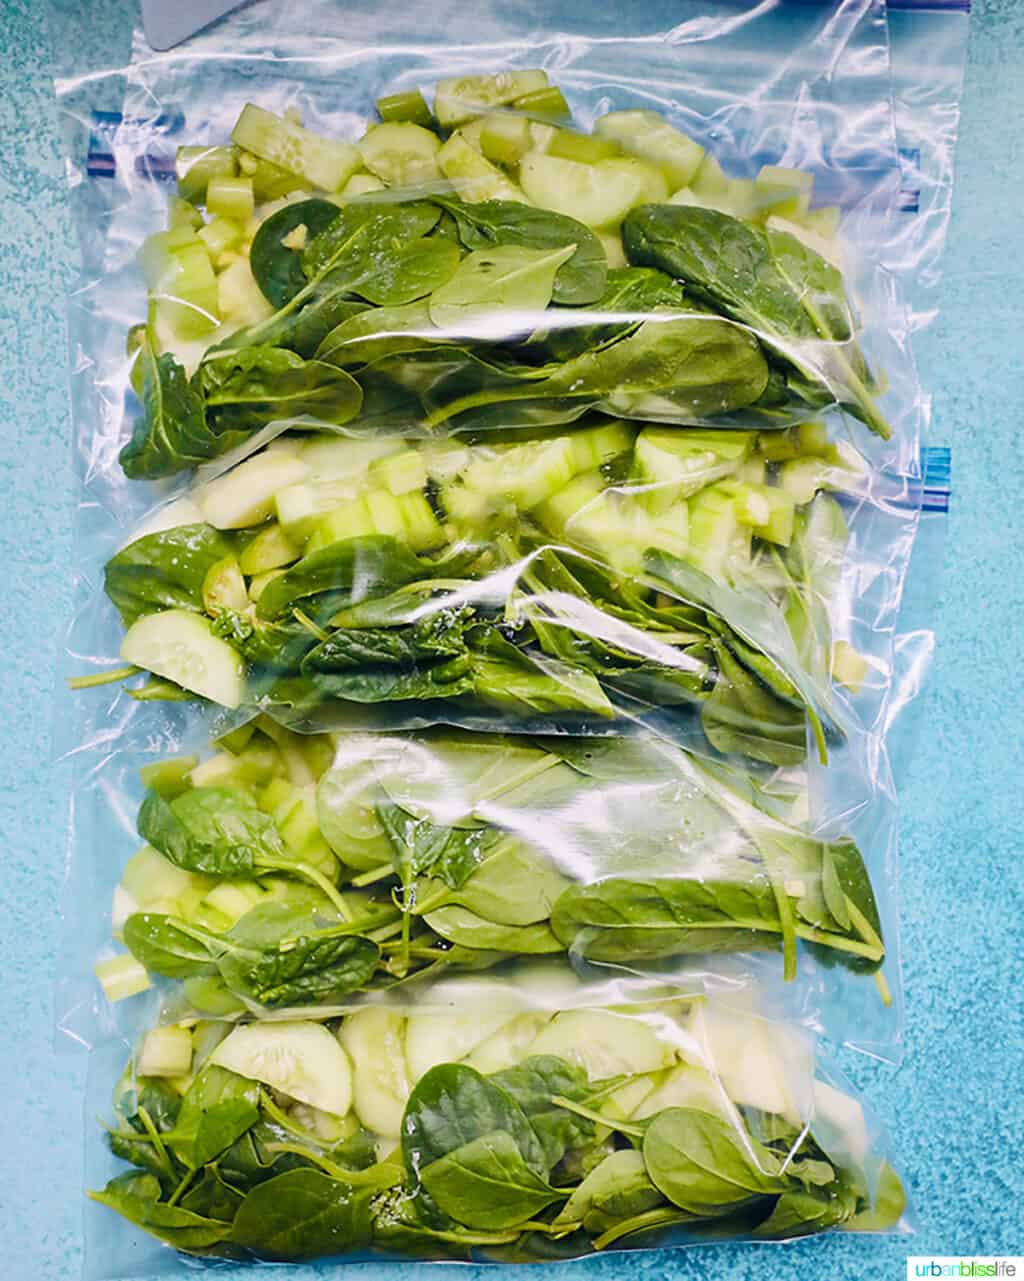 freezer-ready green smoothie packs